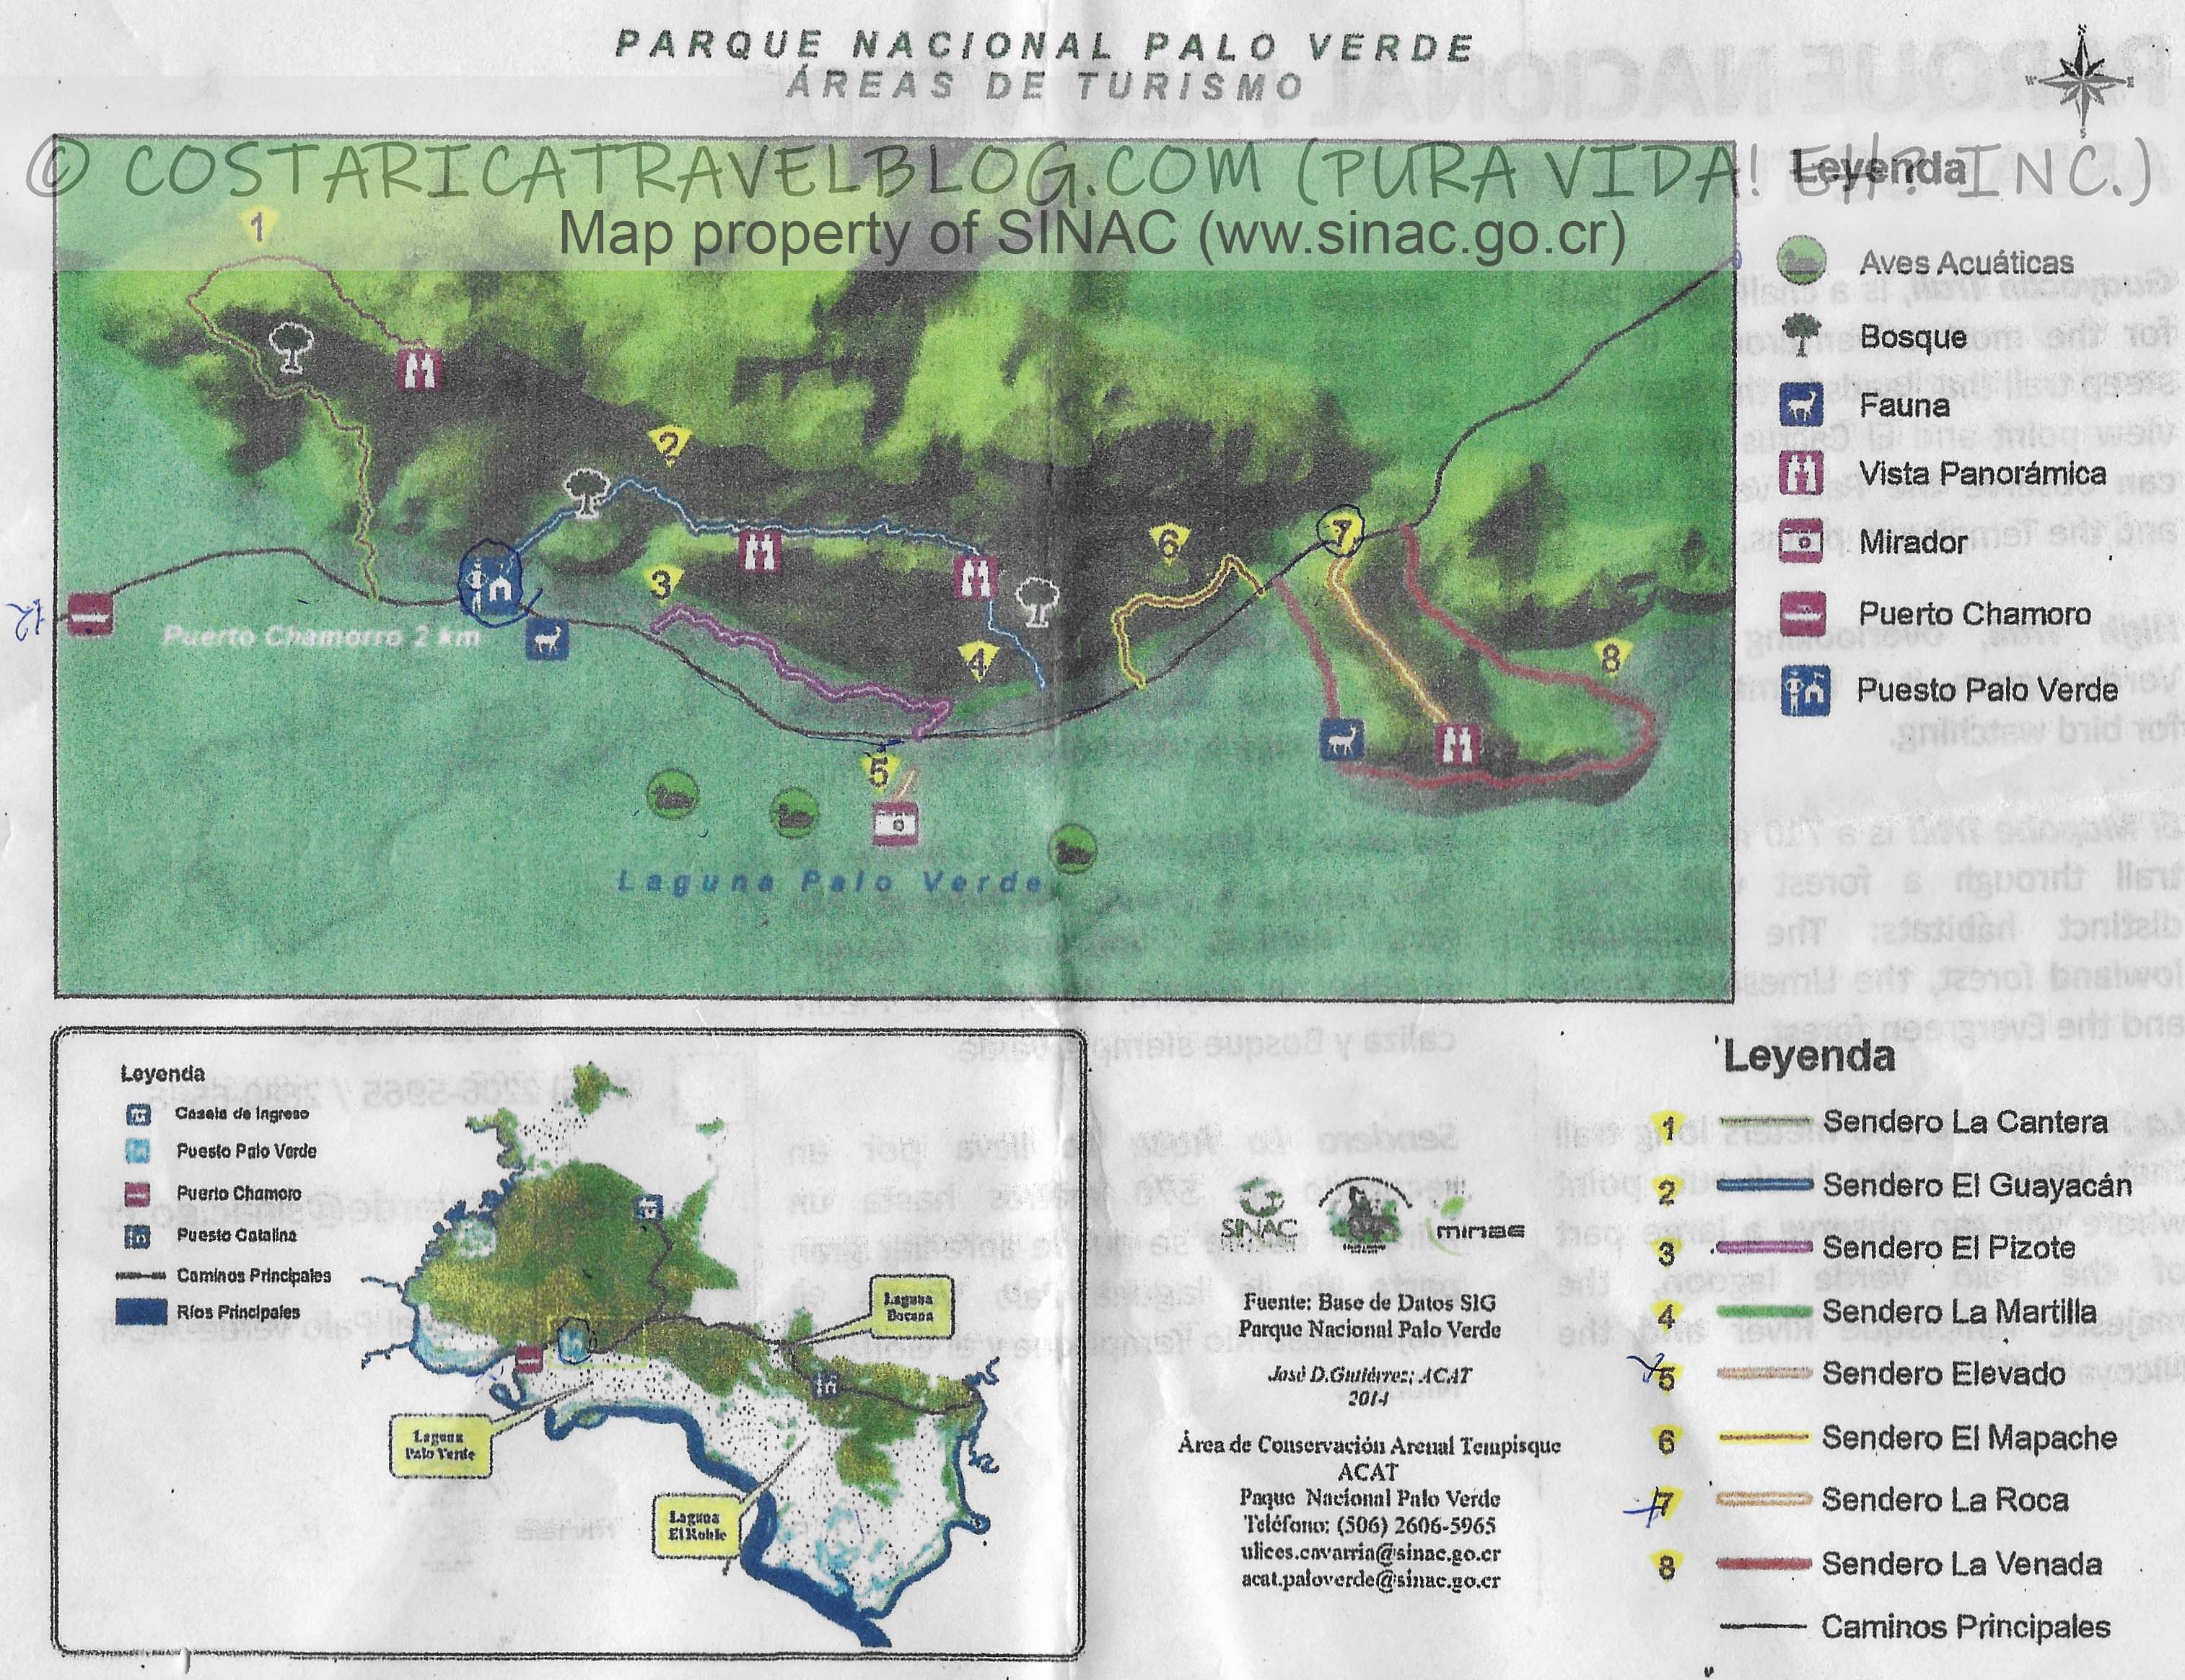 Palo Verde National Park Trail Map